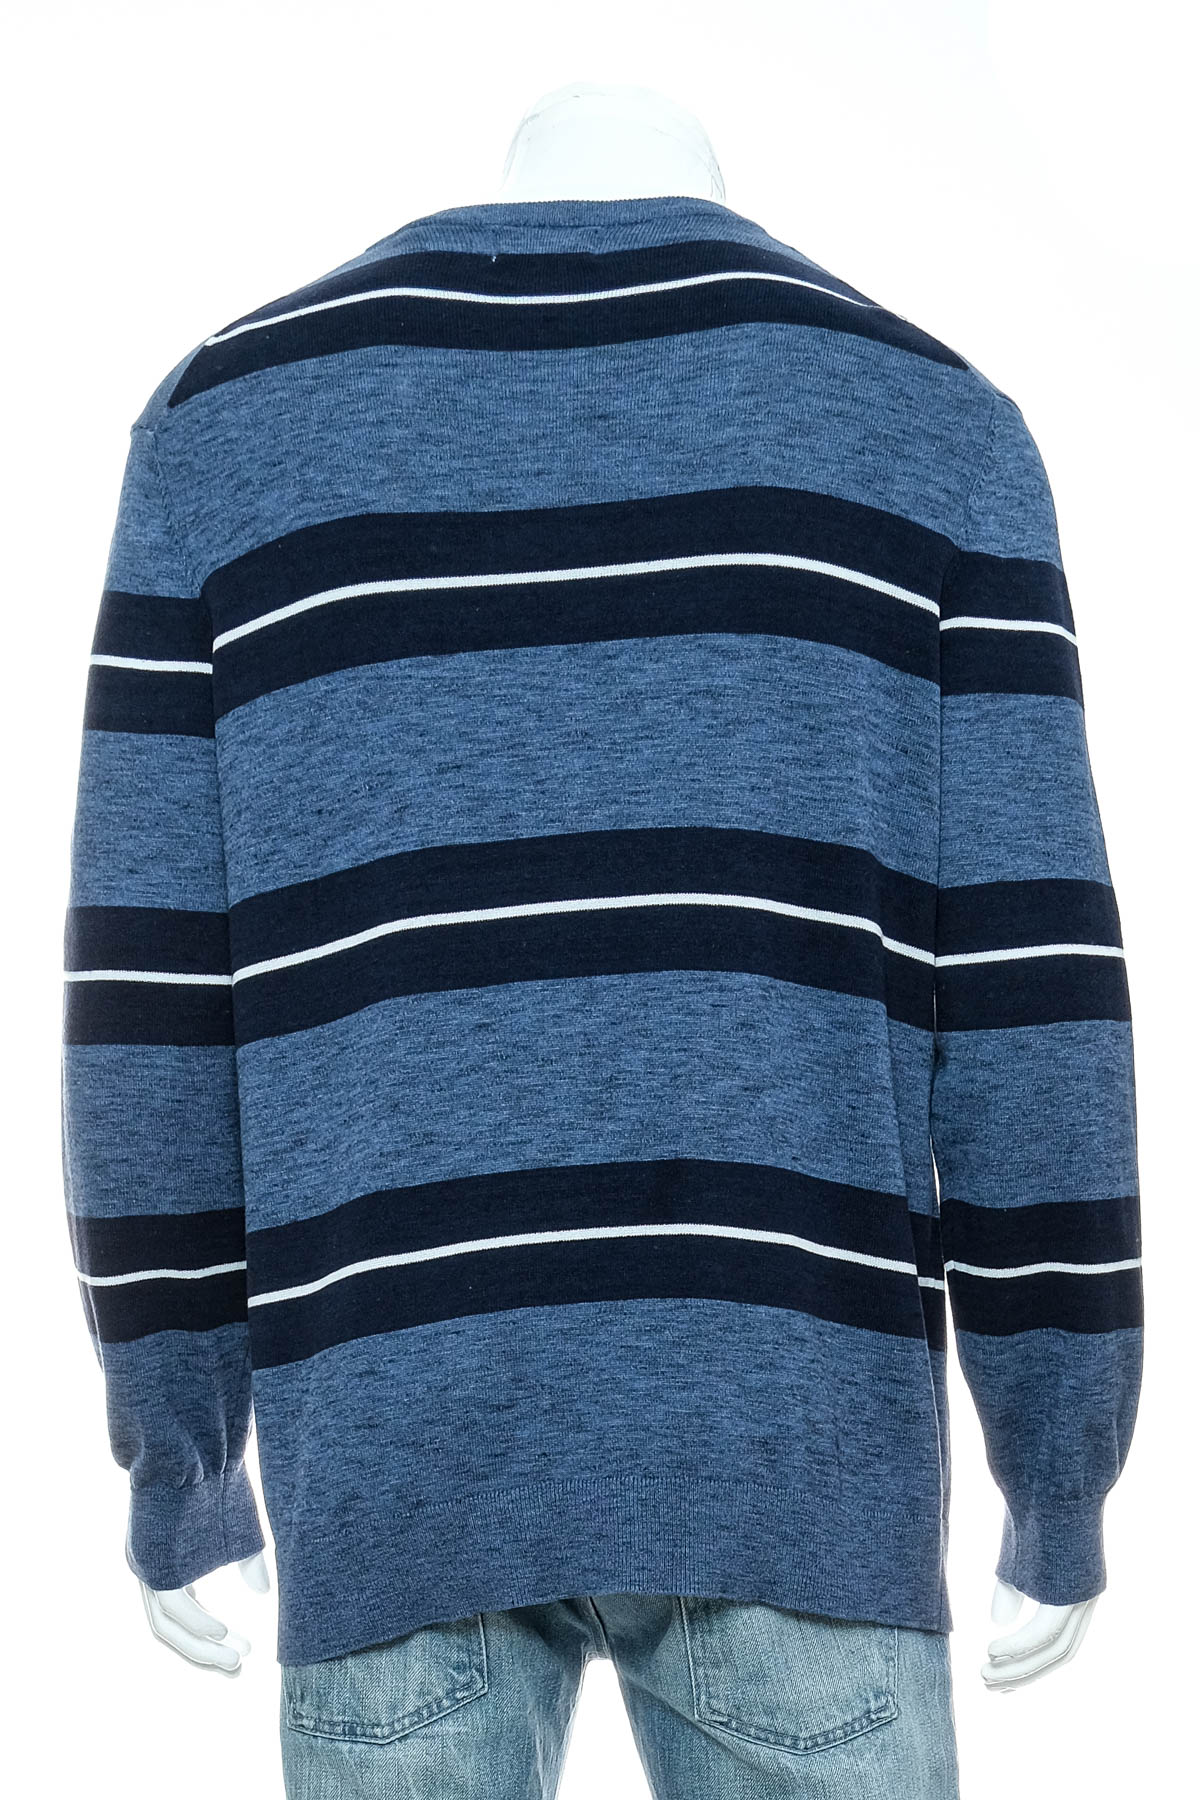 Men's sweater - C&A - 1